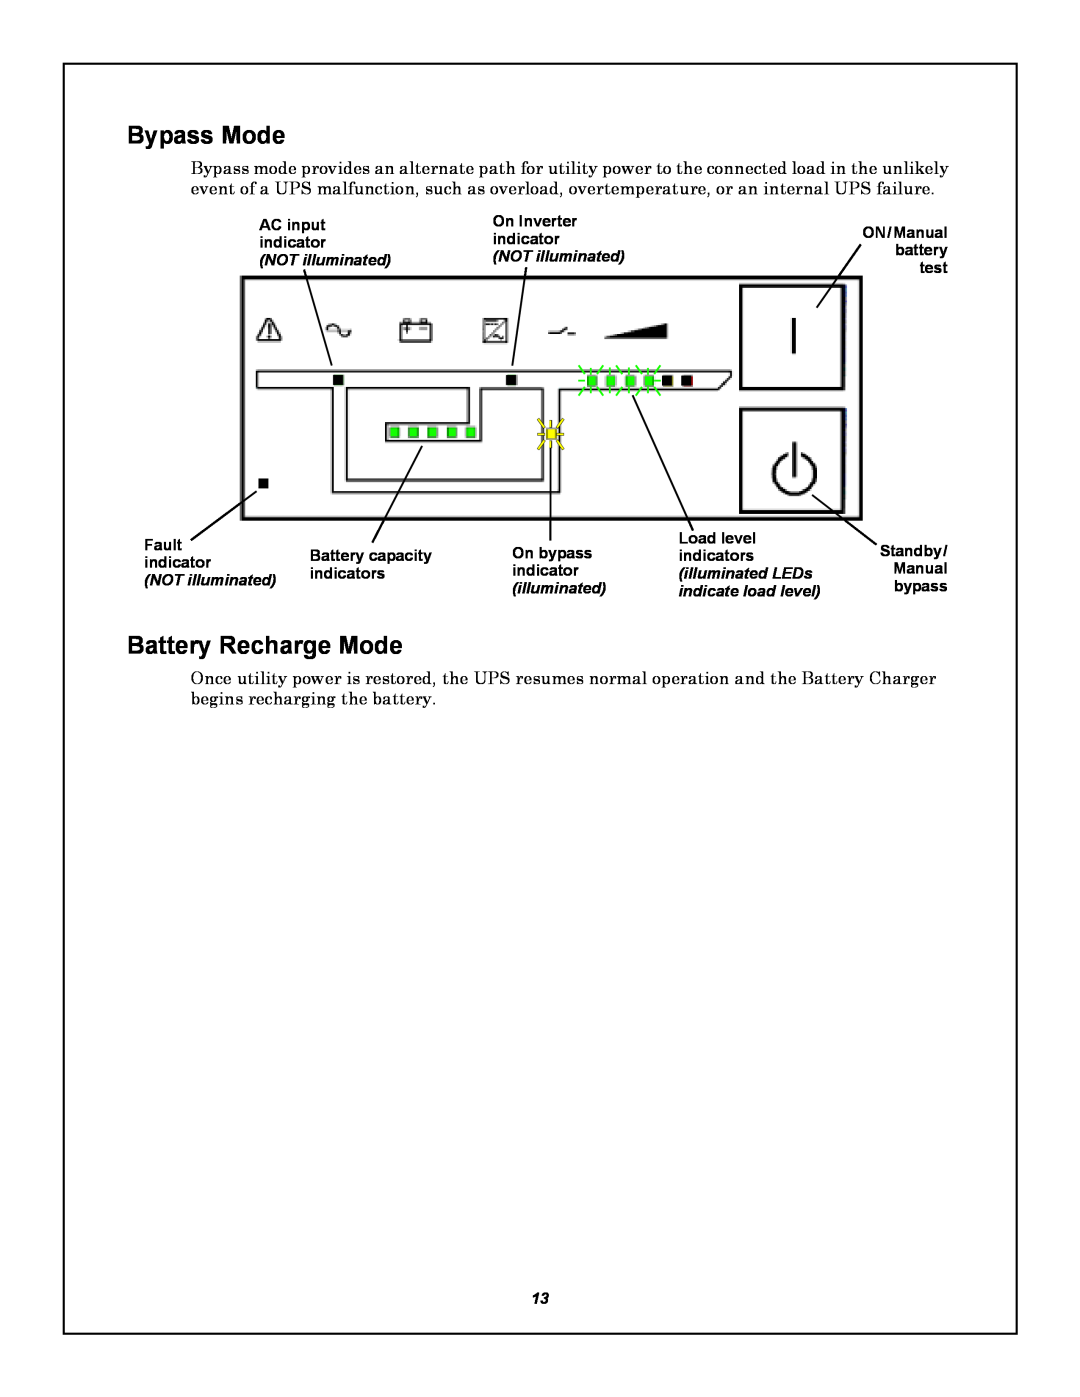 Emerson GXT5000R-208 user manual Bypass Mode, Battery Recharge Mode, NOT illuminated, NOTilluminated, illuminated LEDs 